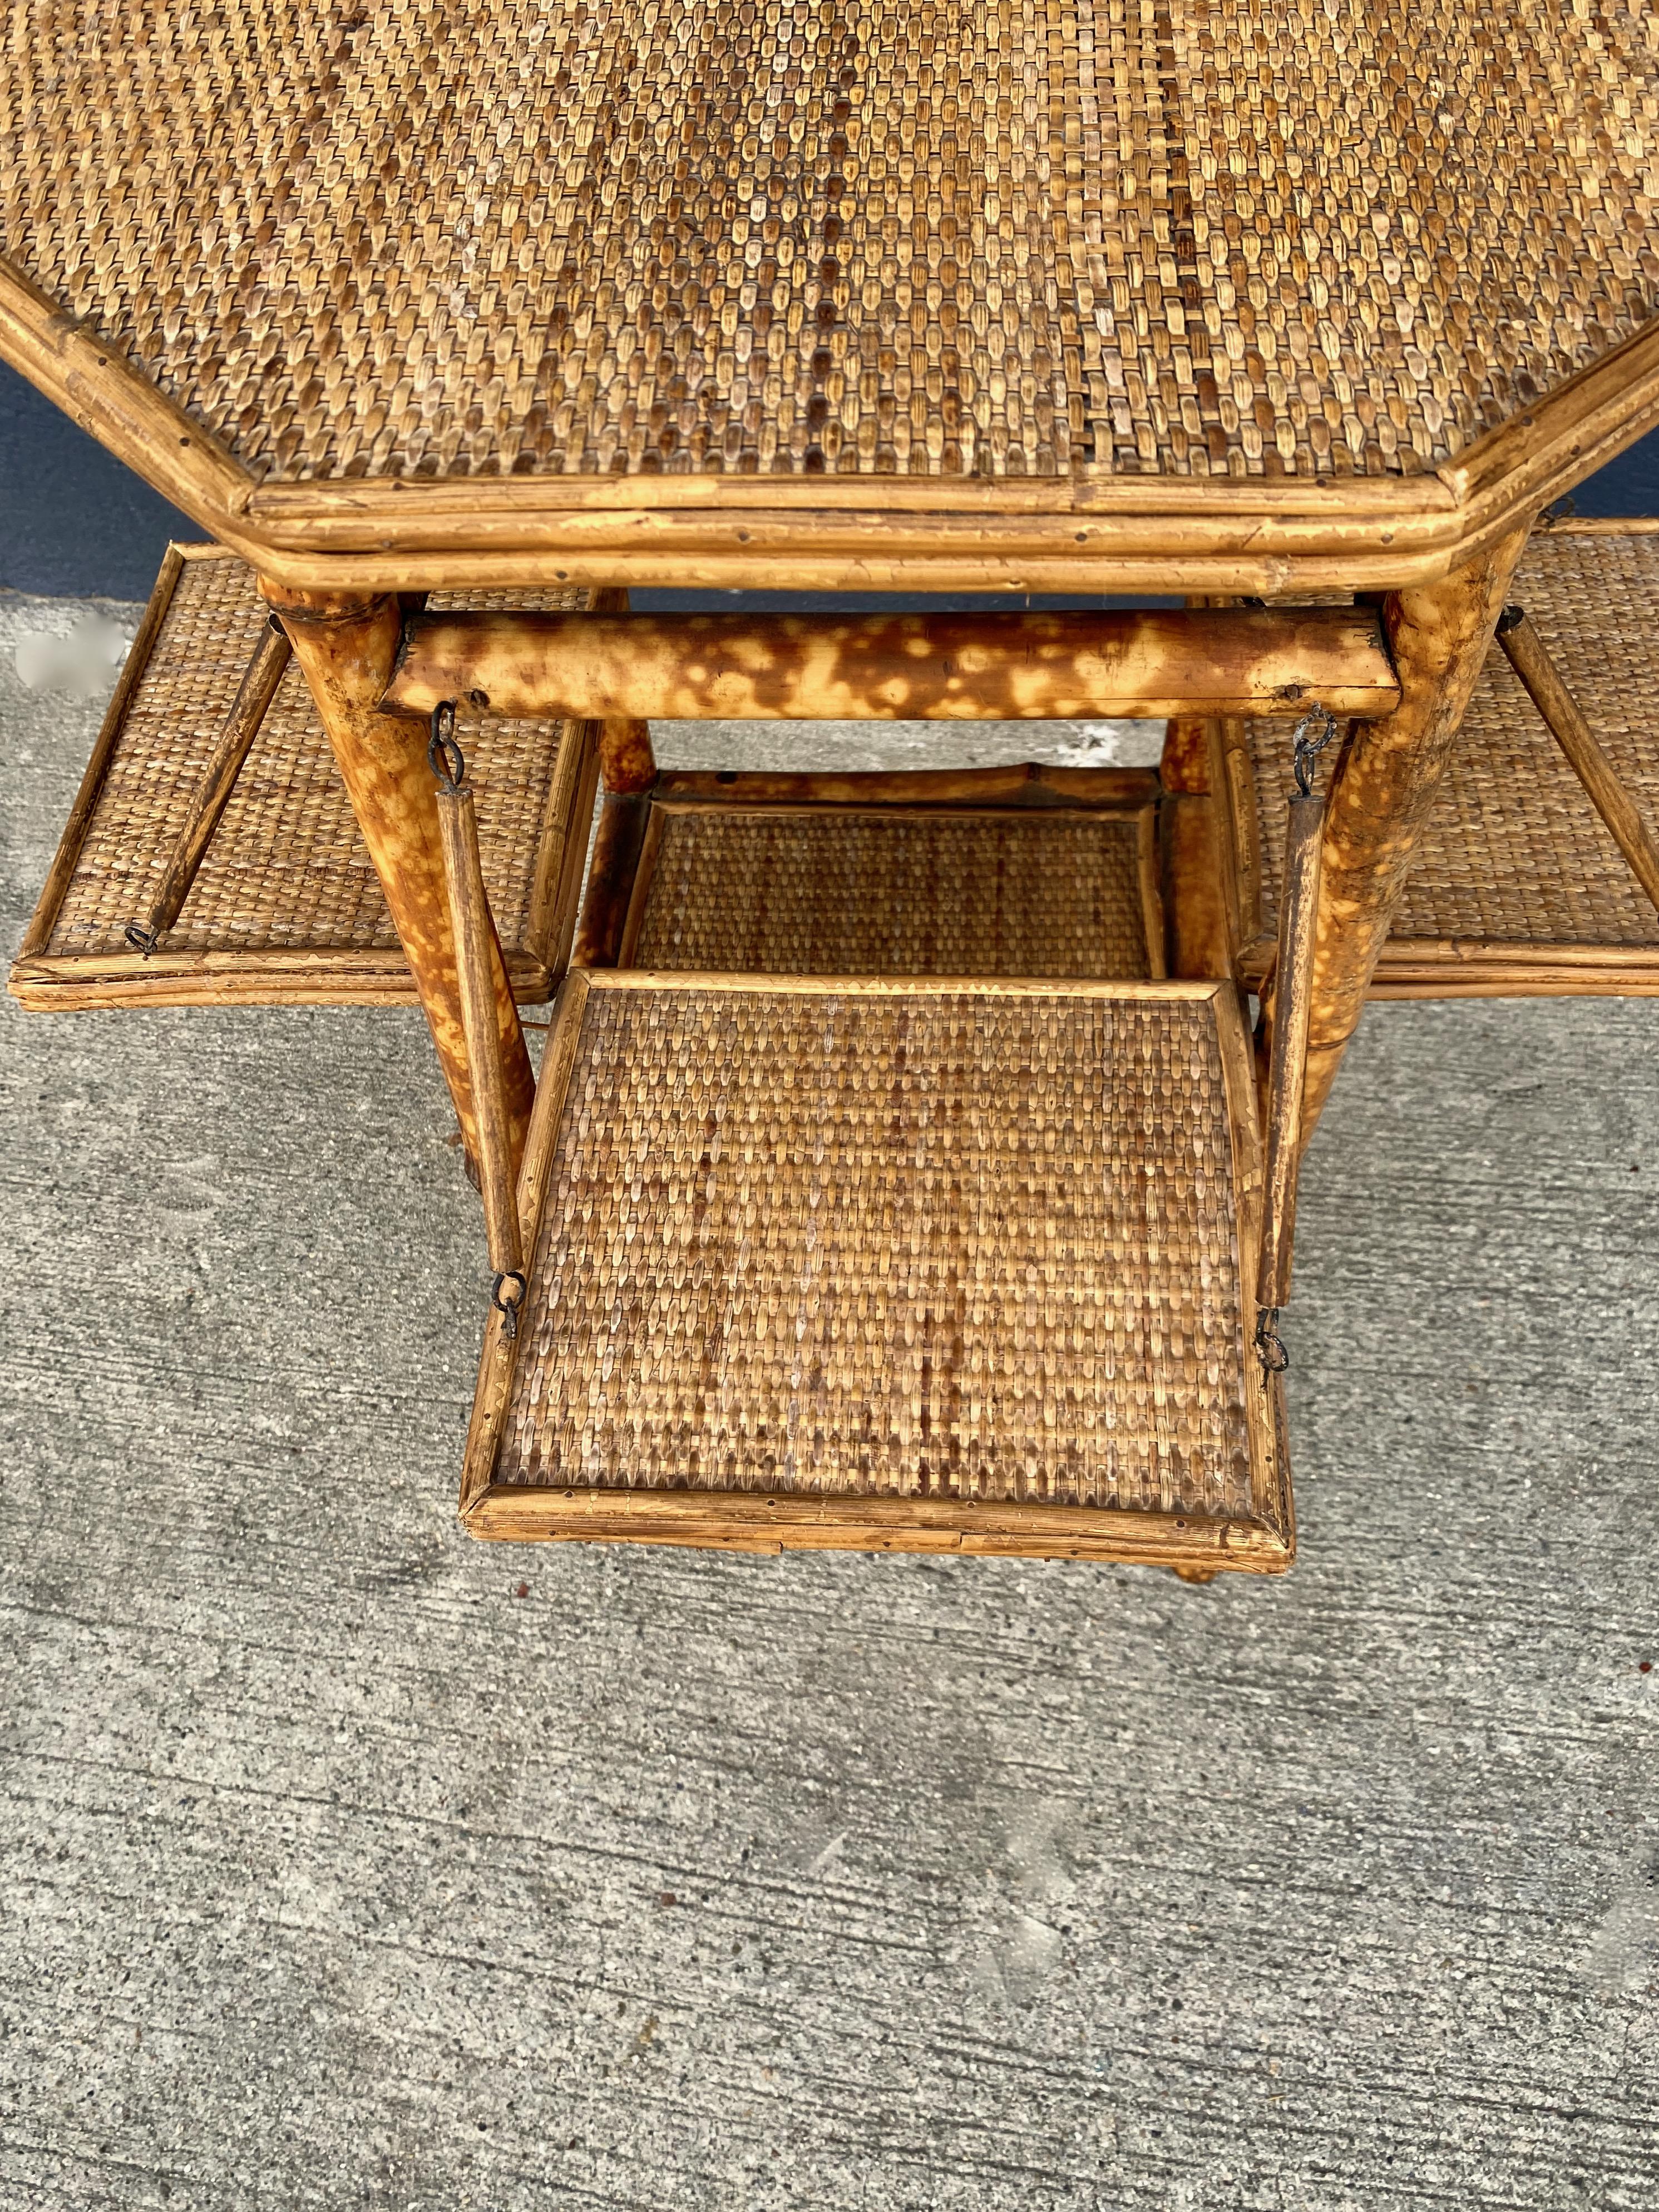 English Rattan and Bamboo Tea Table, C. 1900-1920 For Sale 2